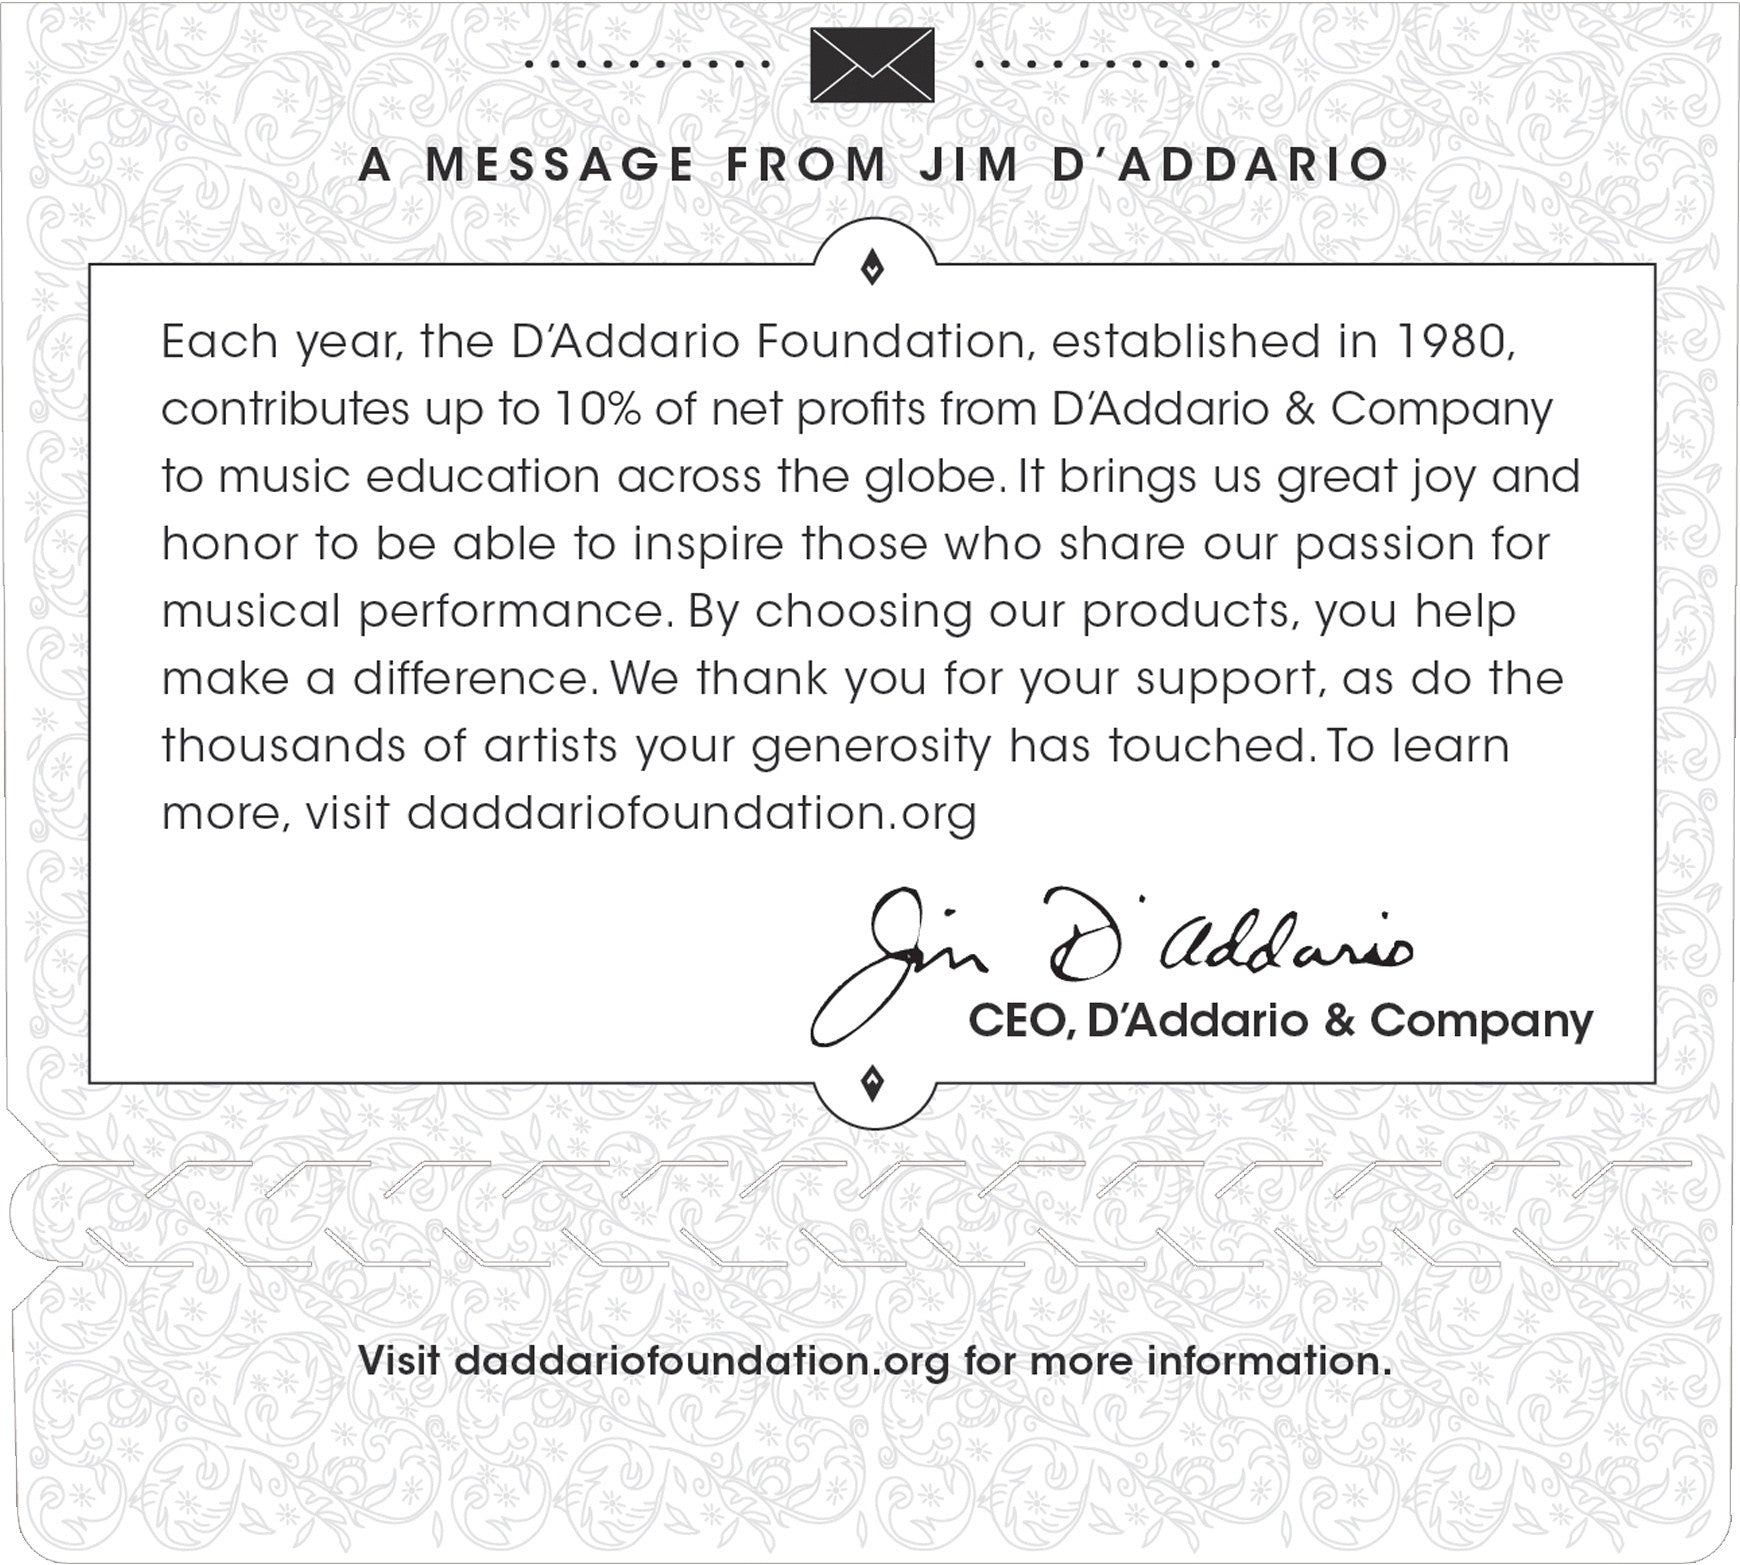 D'Addario EJ46 Pro Arte Classical Guitar Hard Tension - Regent Sounds